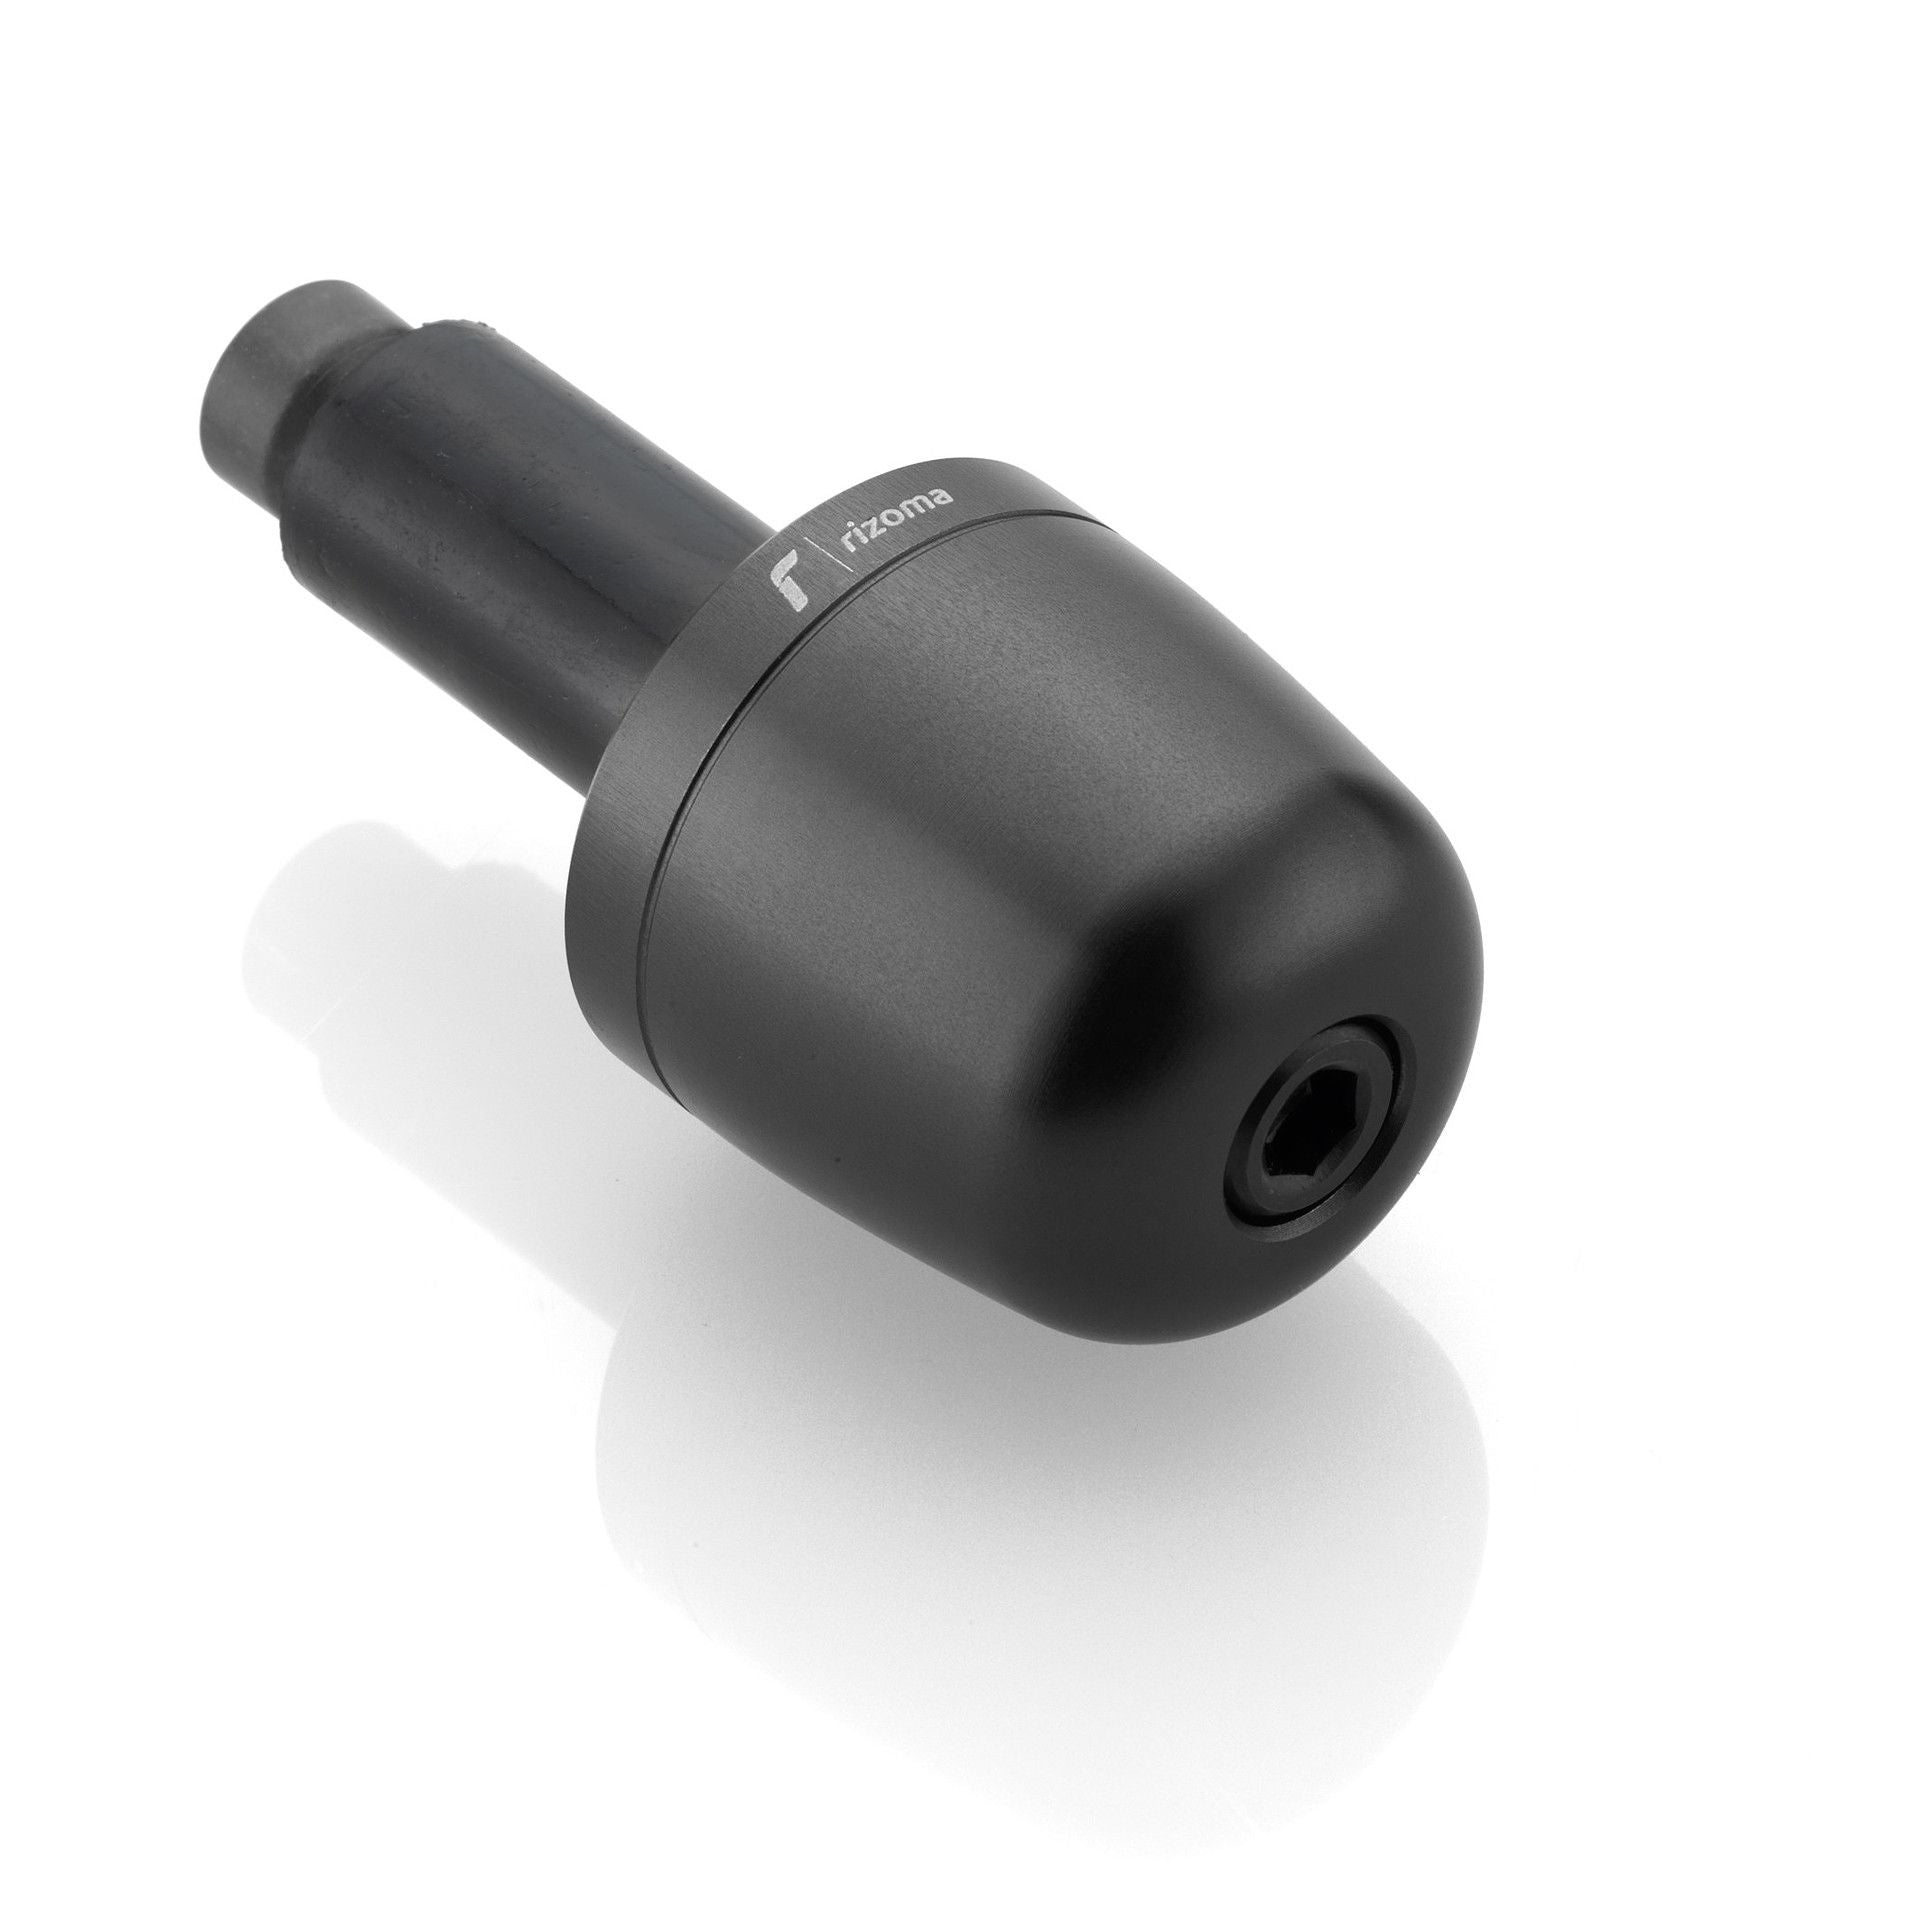 Rizoma Conical Single Bar-End Plug MA301B - Black